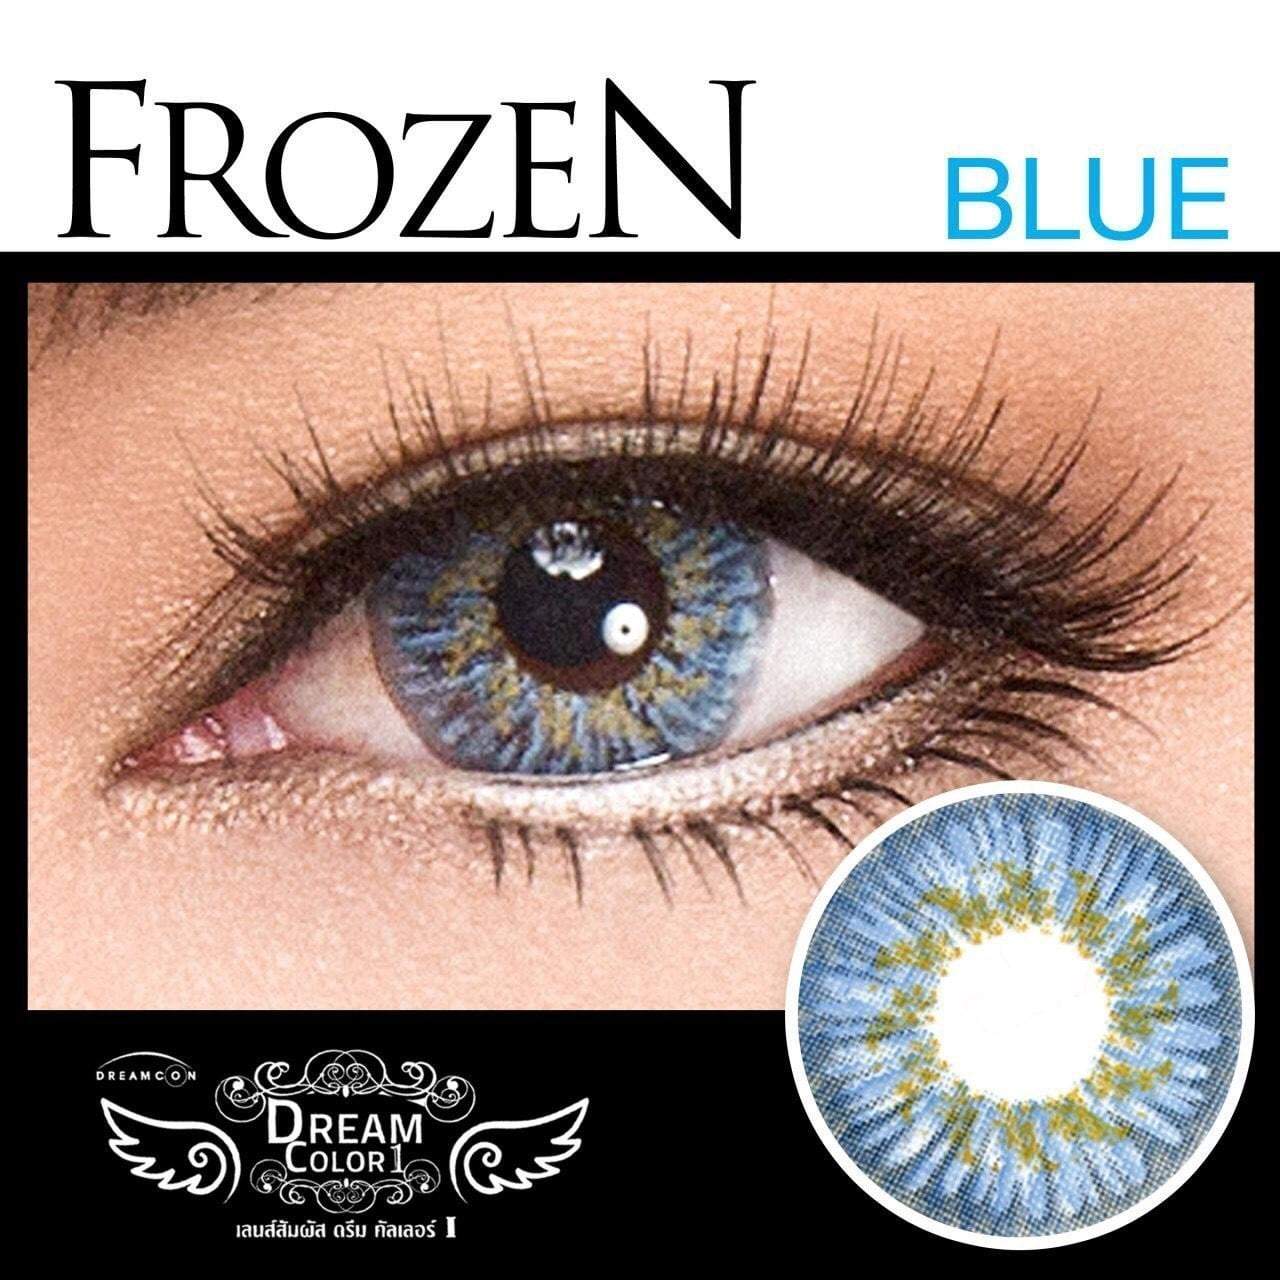 COLORED CONTACTS DREAM COLOR FROZEN BLUE - Lens Beauty Queen